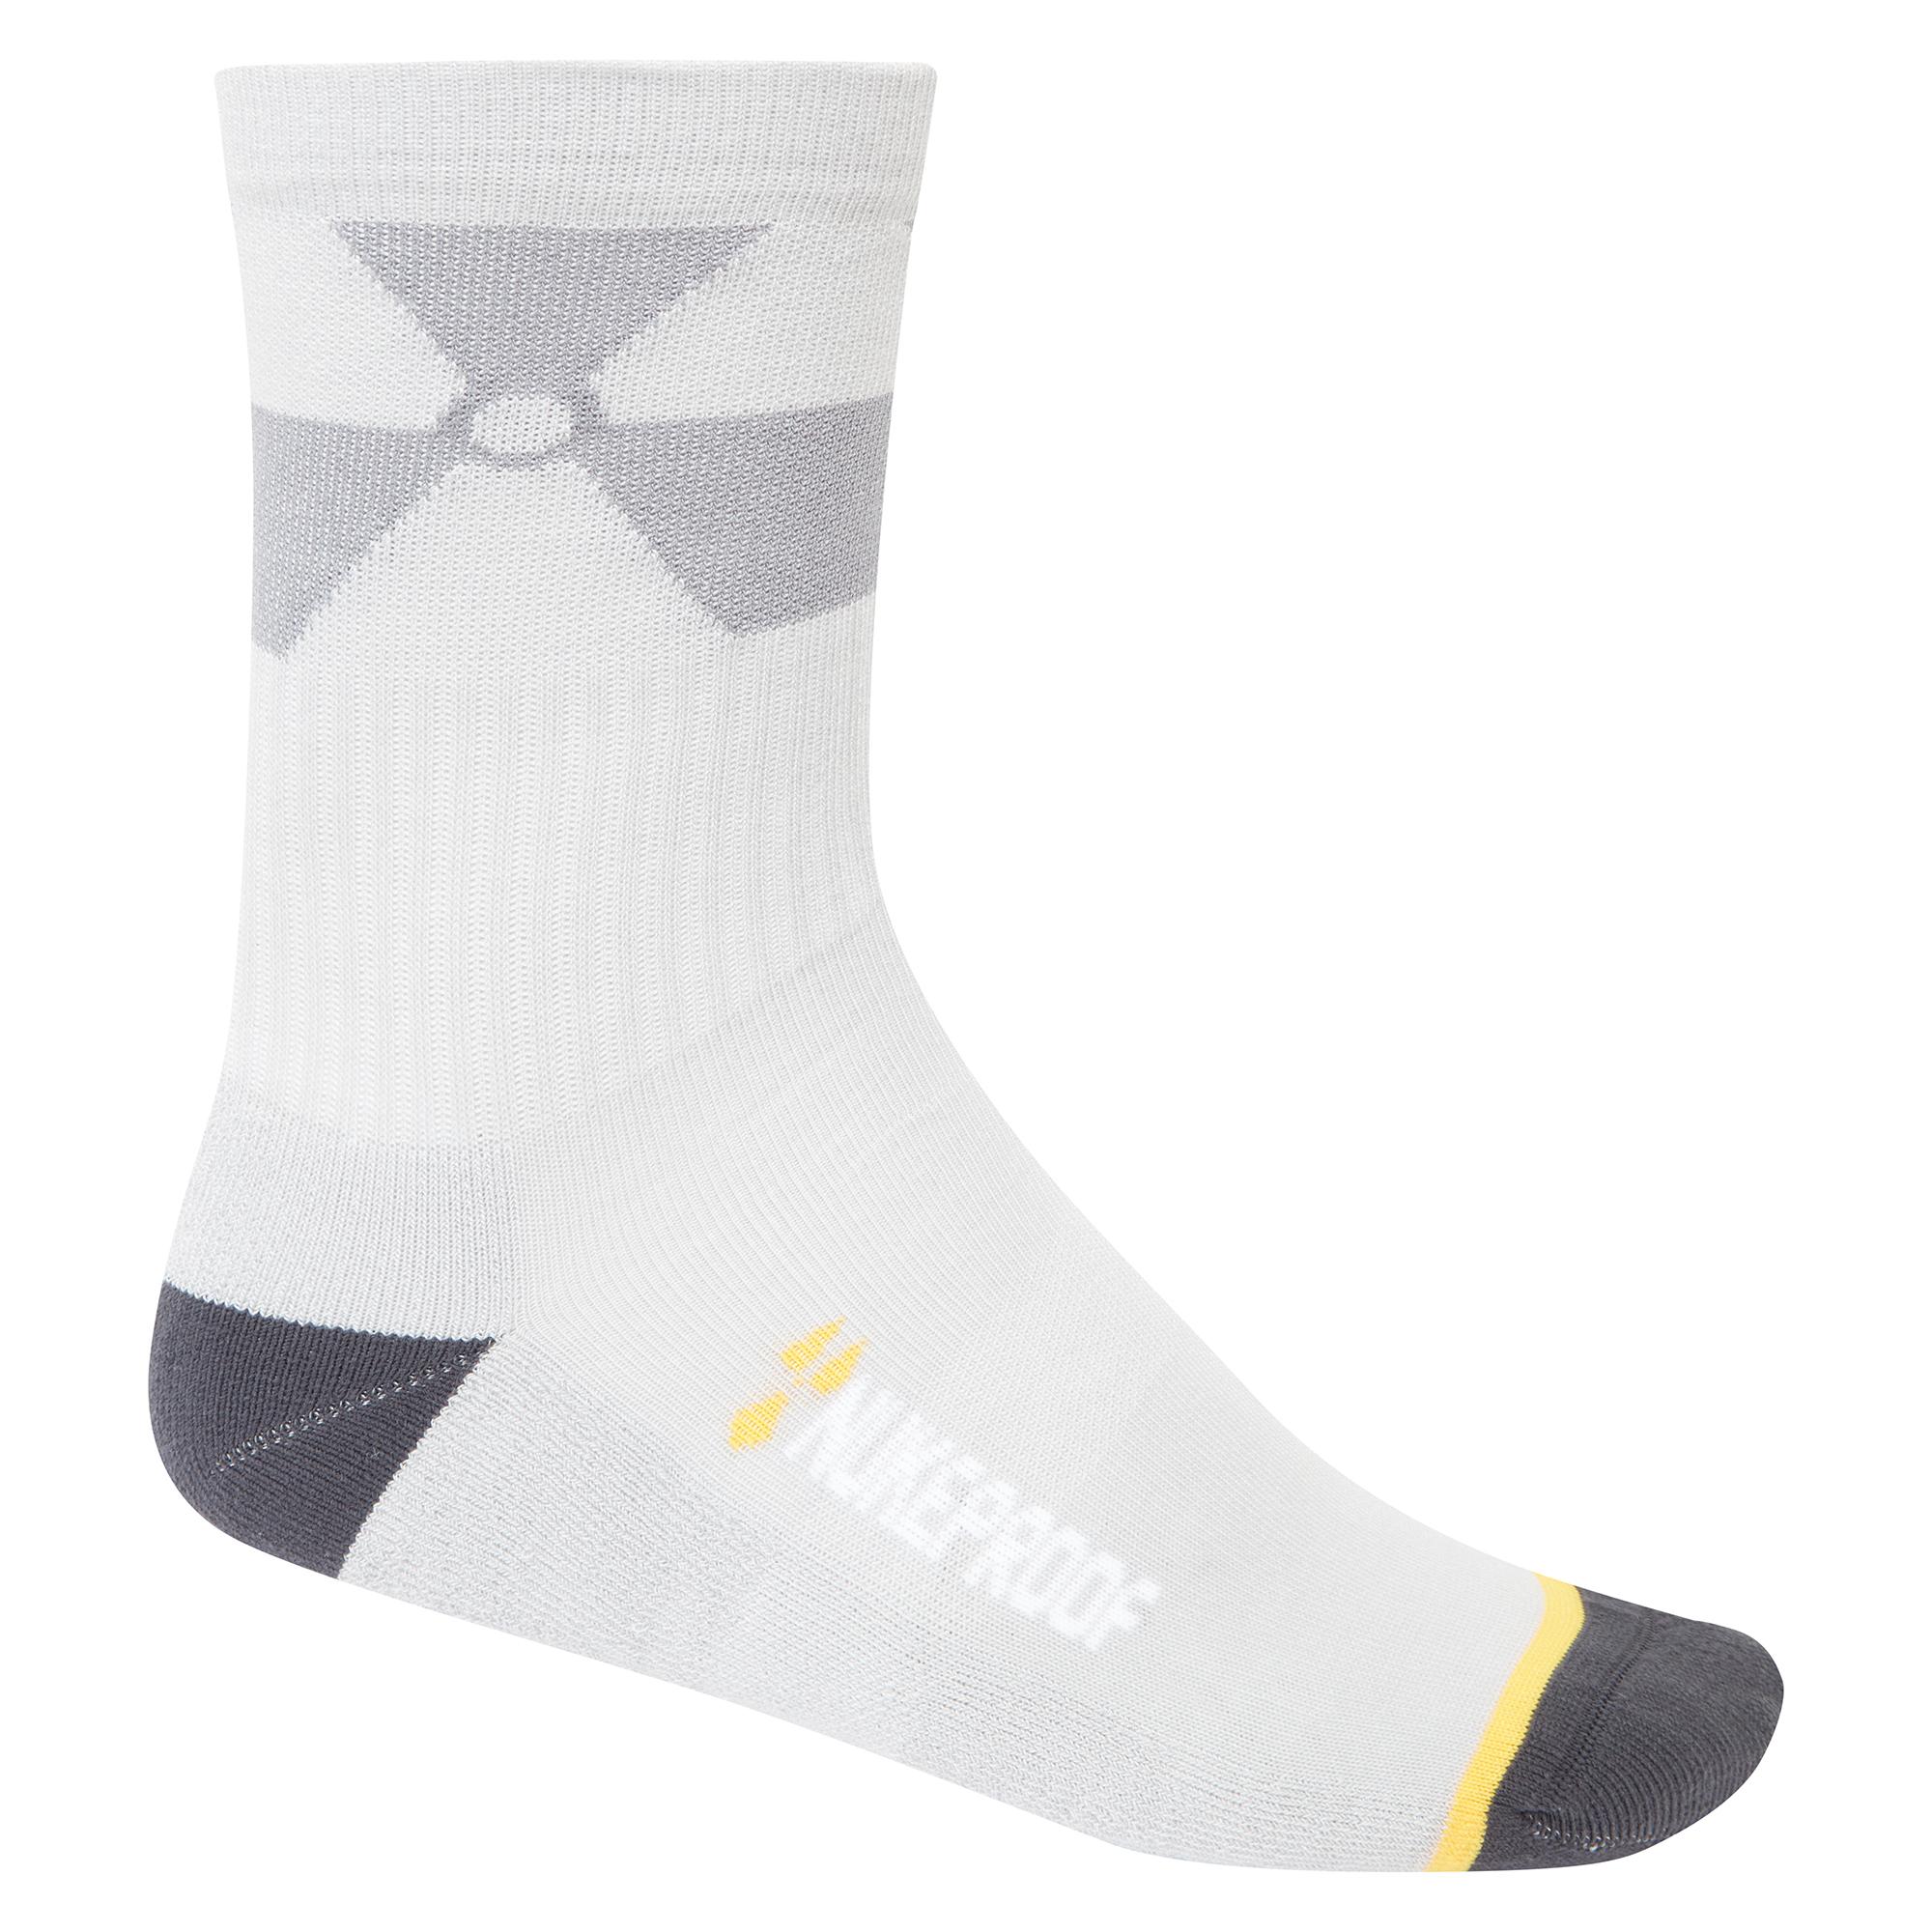 Nukeproof Blackline Sock 2.0 - Grey